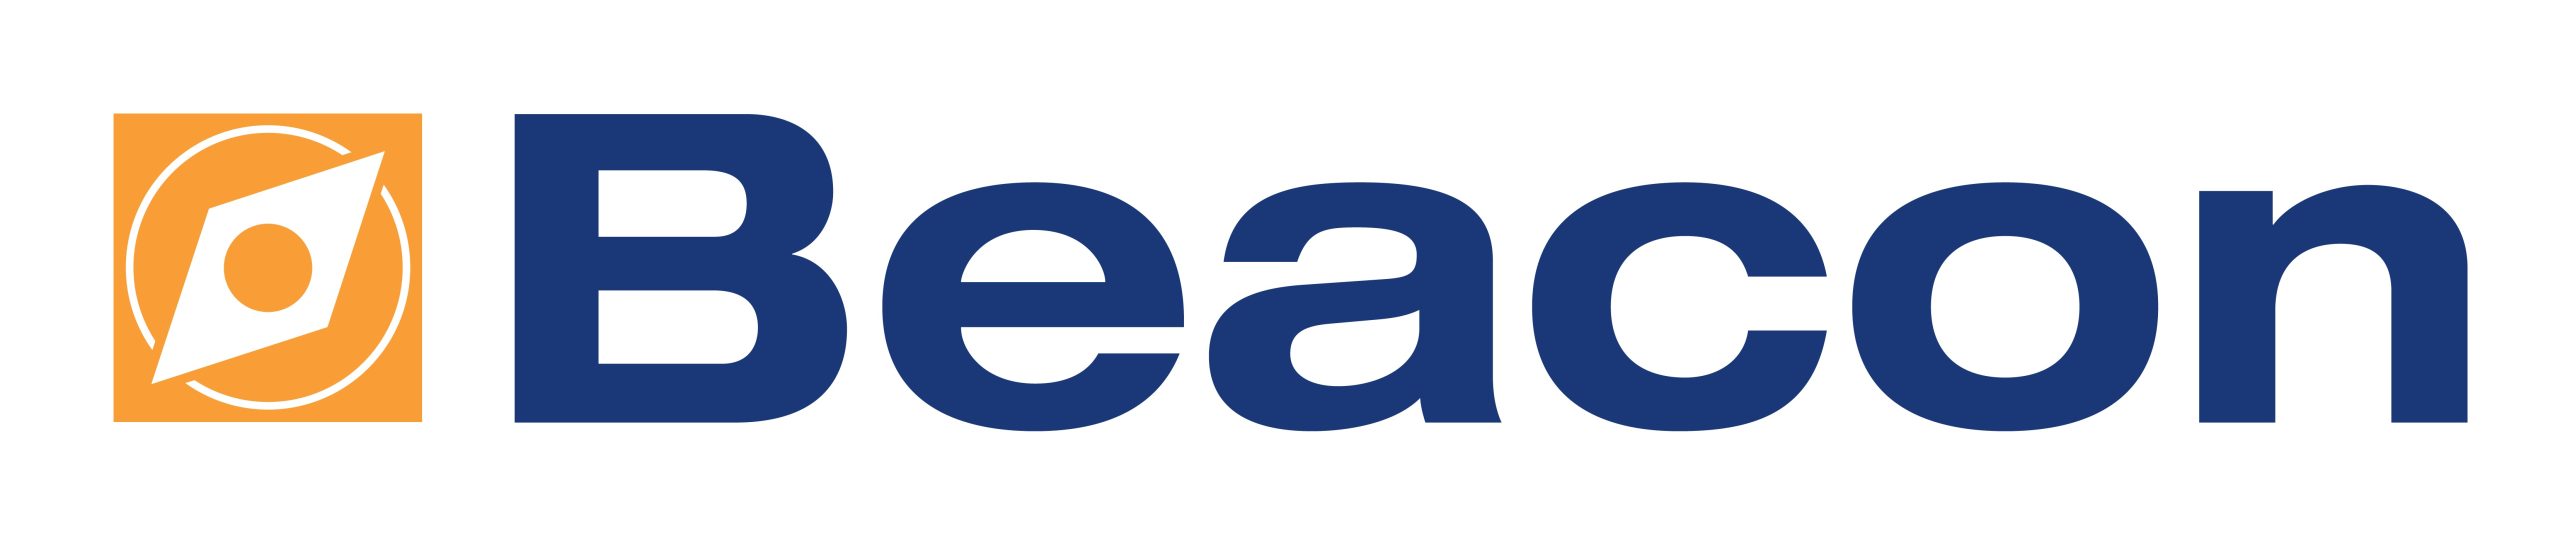 Beacon logo - blue text with orange compass graphic